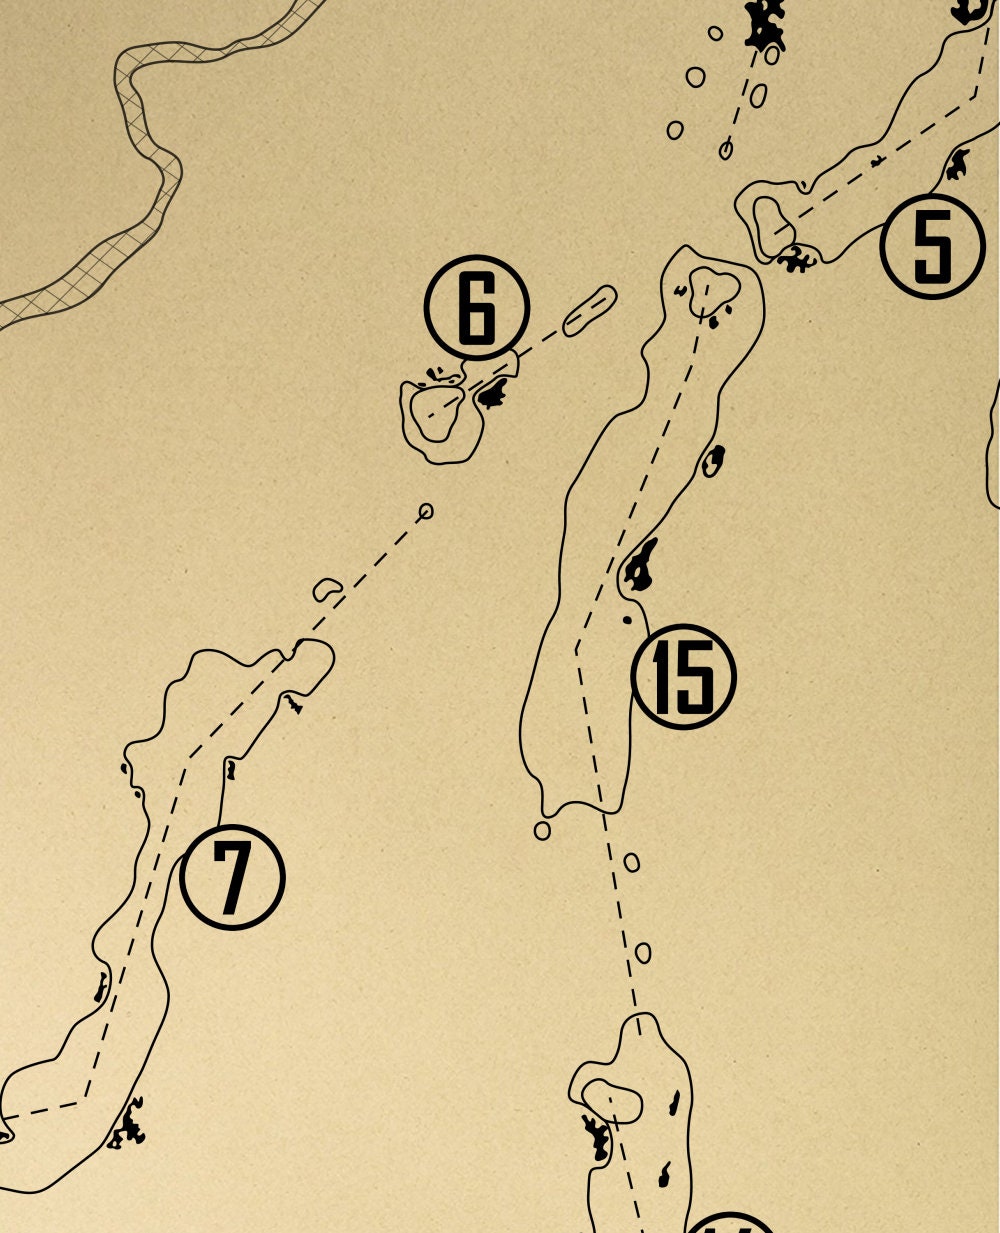 The Prairie Club Pines Course Outline (Print)